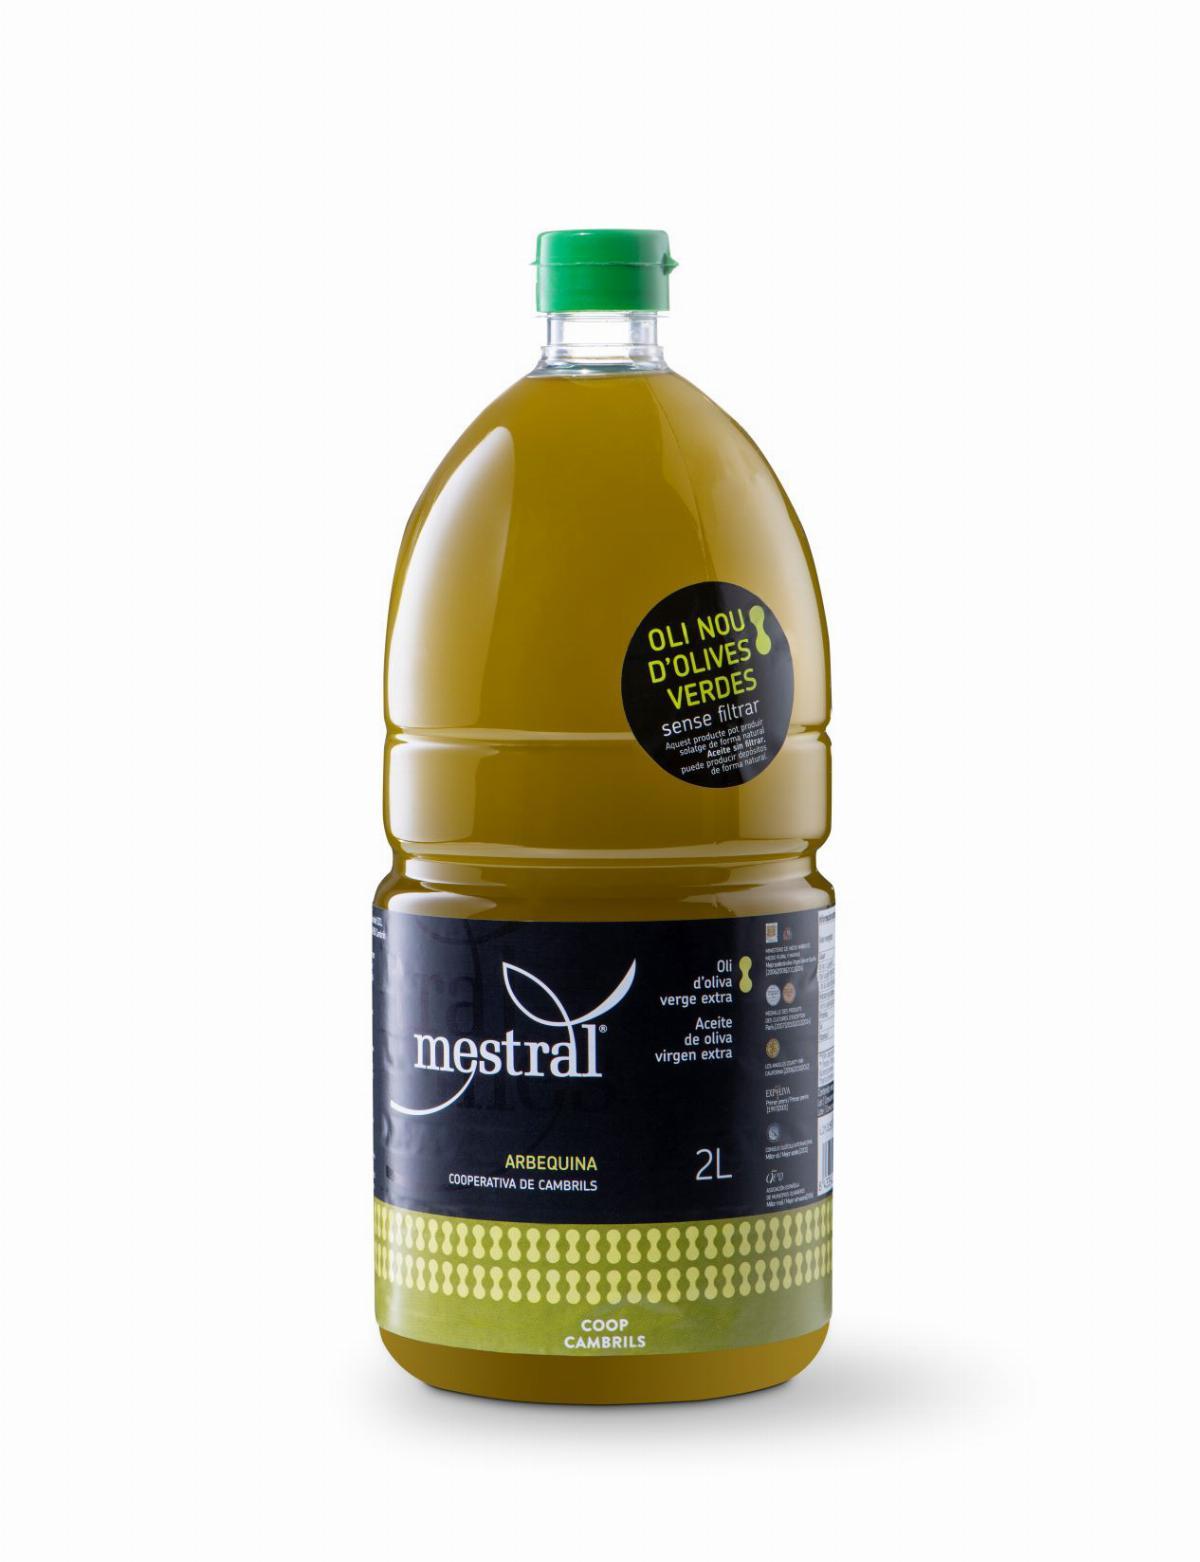 Oli d'oliva Verge Extra Mestral DEL RAIG (sense filtrar)  PET 2 Litres DOP Siurana